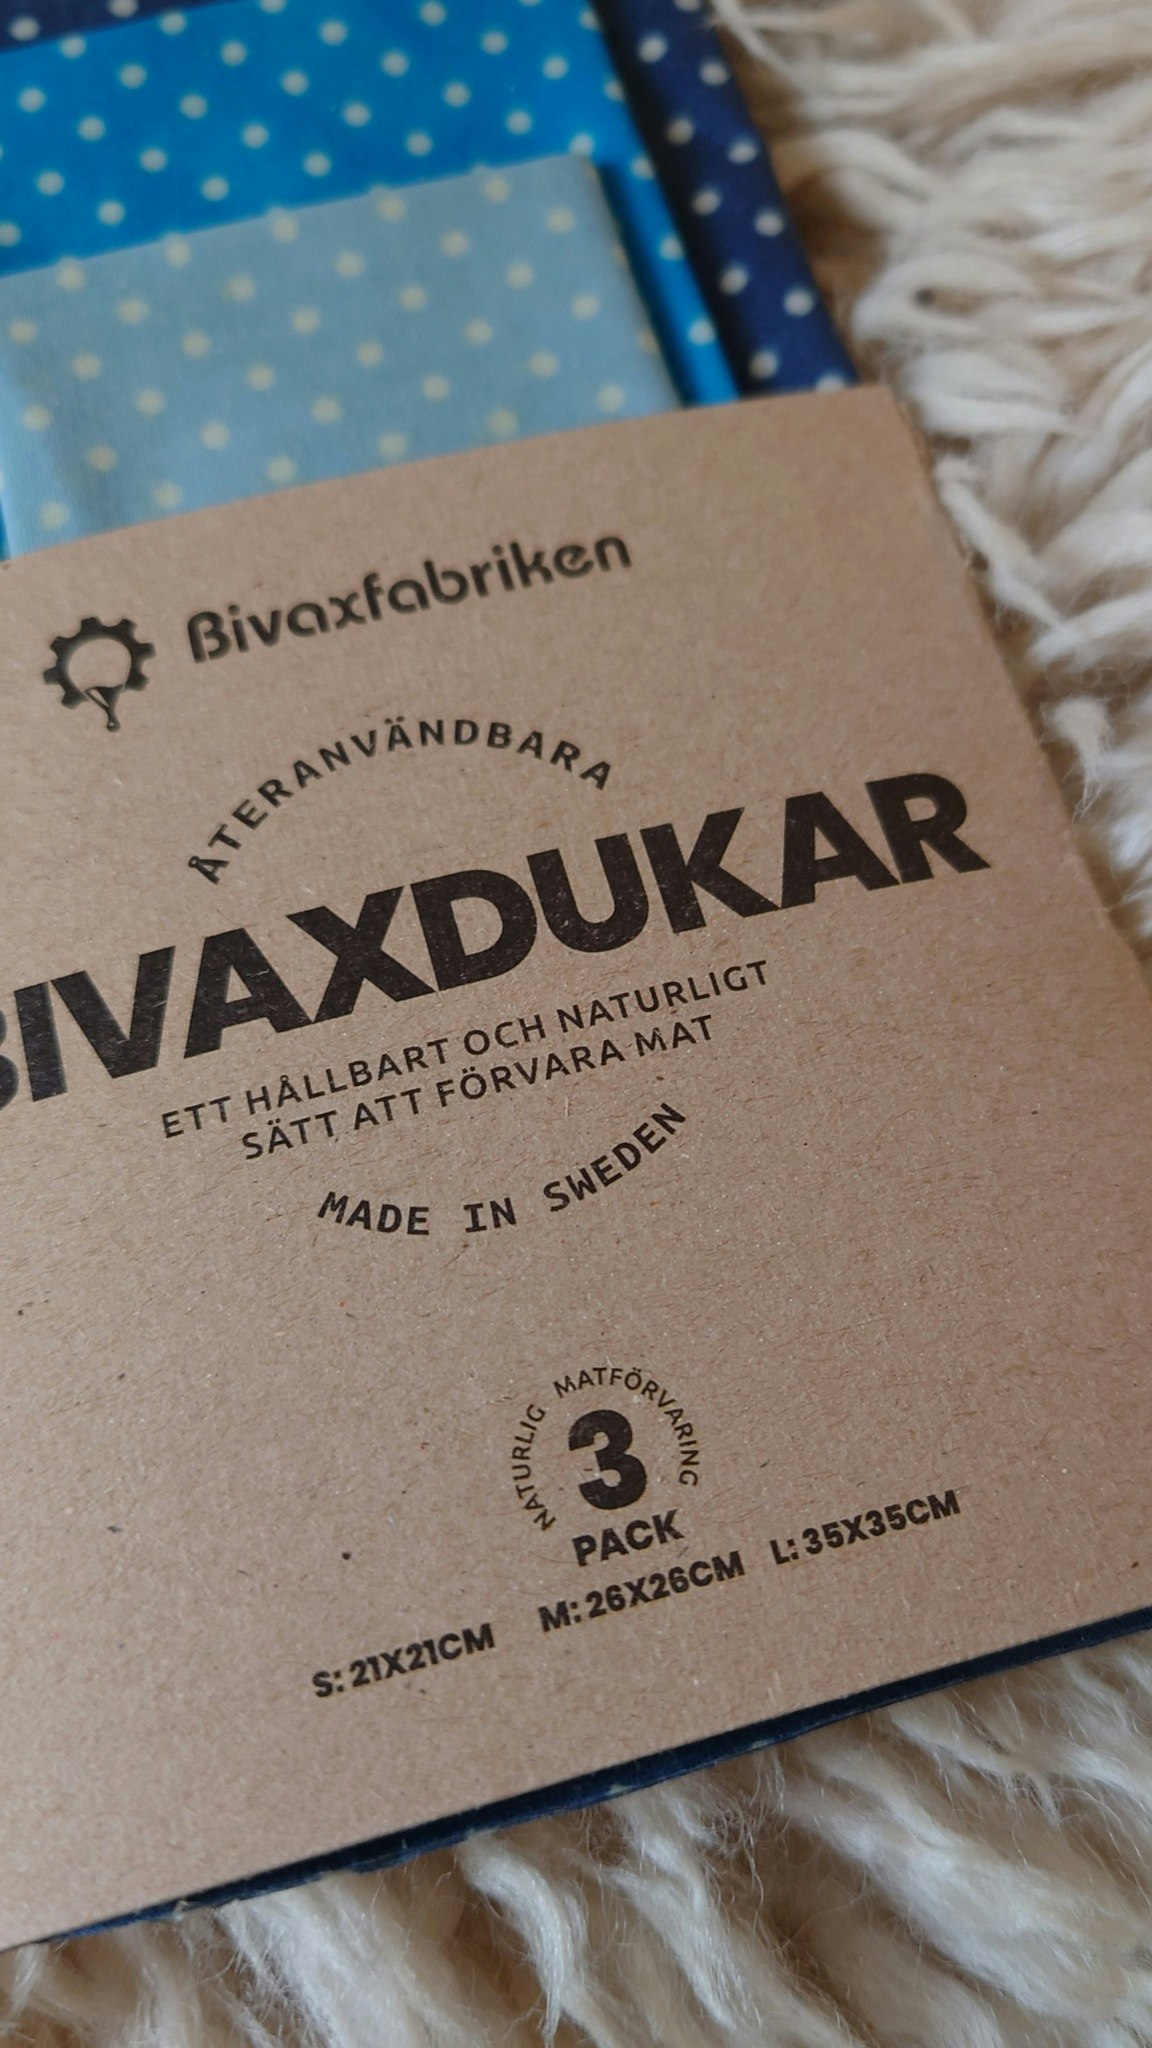 Bivaxduk 3-pack